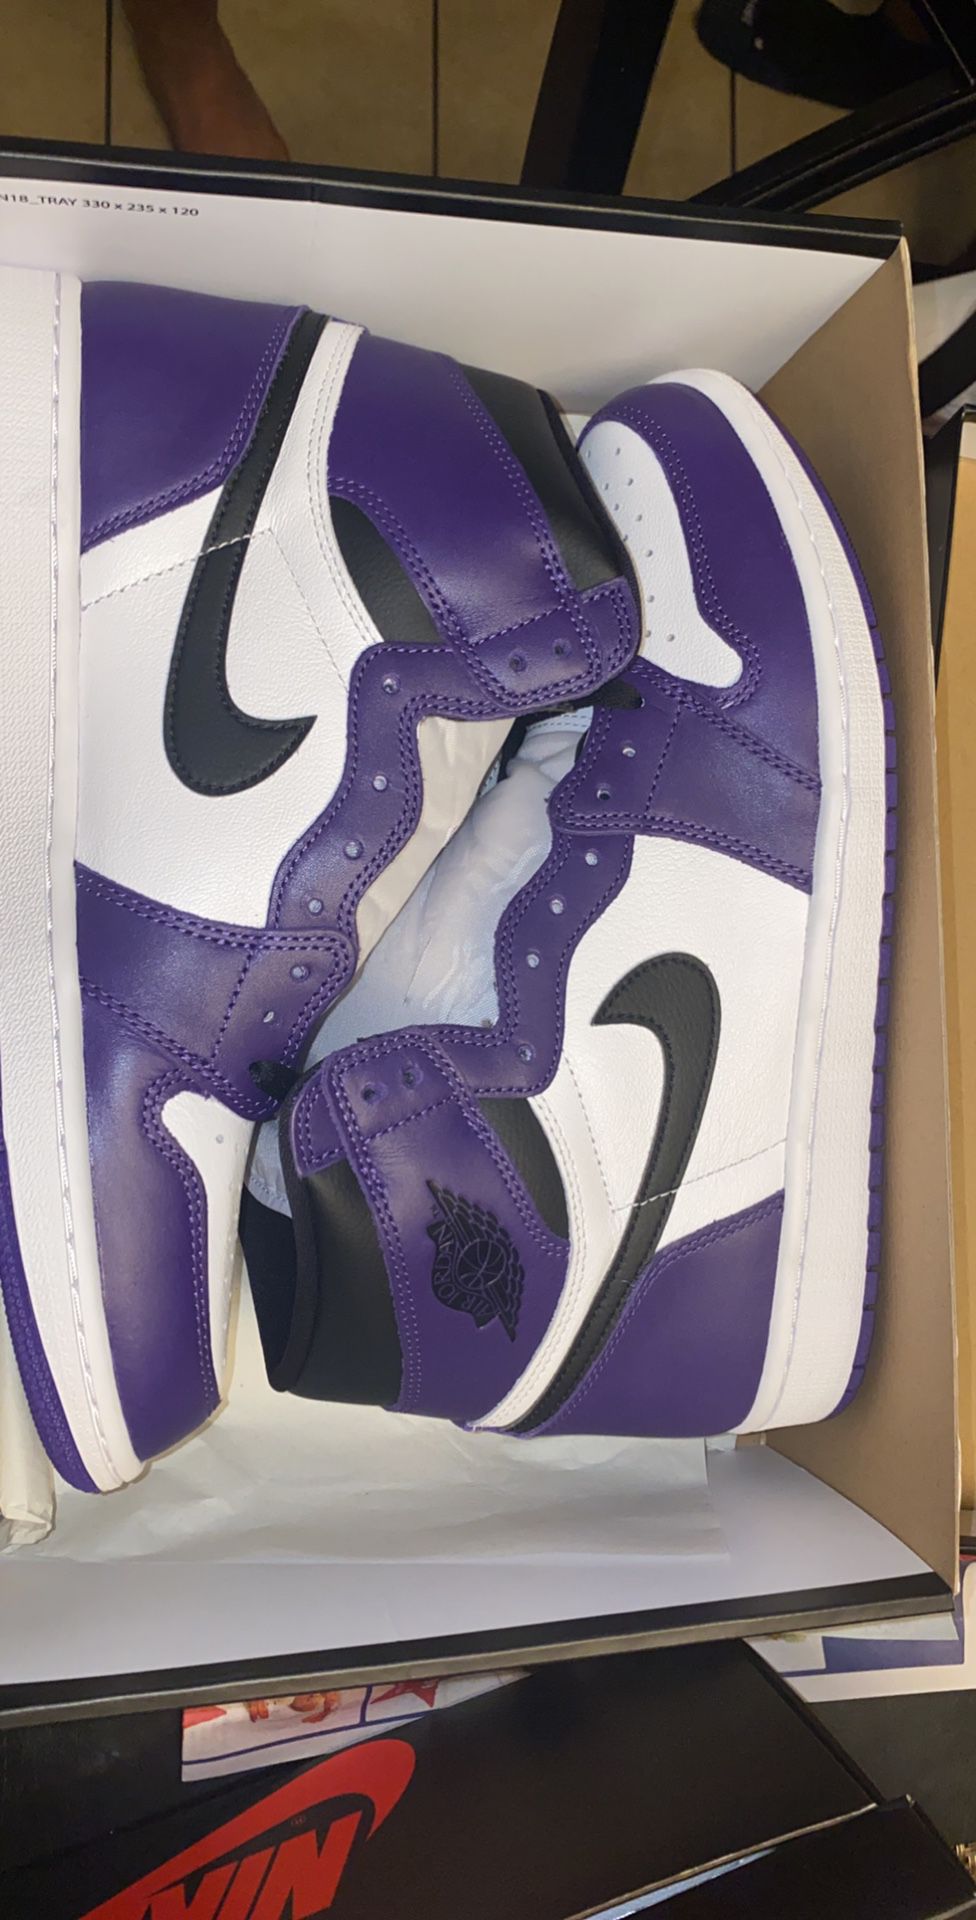 Jordan 1 Court Purples